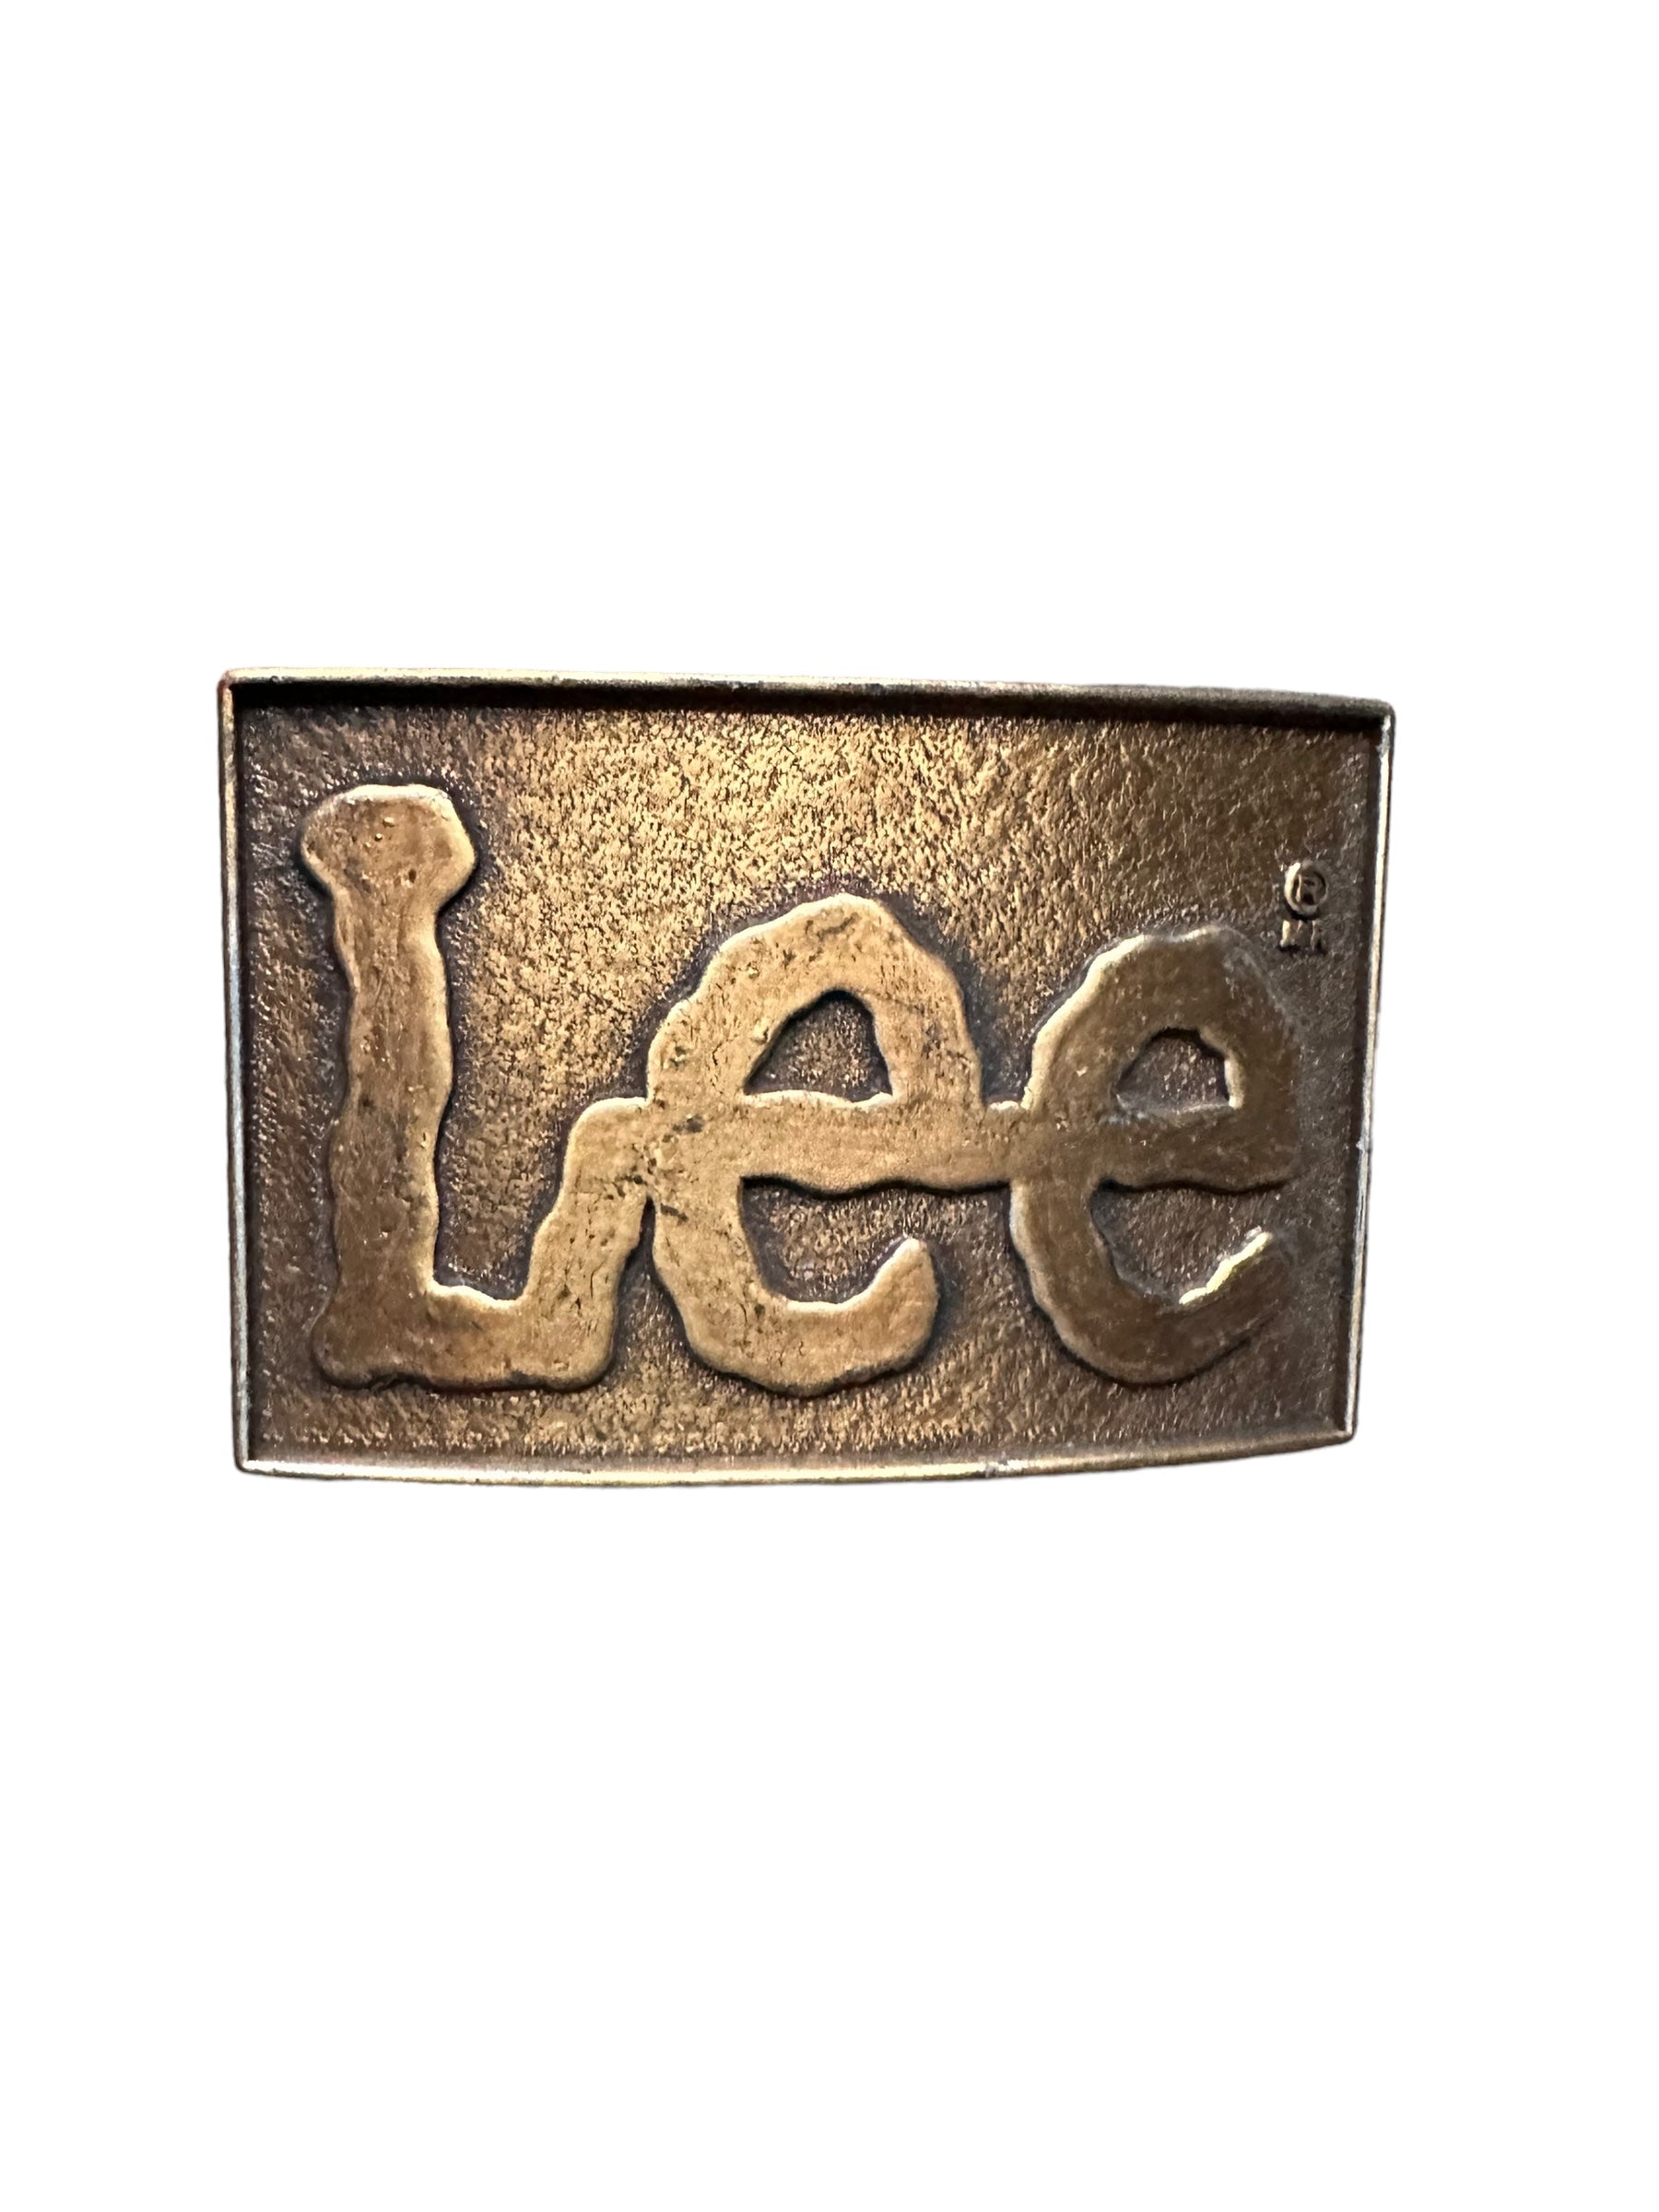 Vintage Brass Lee Jeans Belt Buckle | Barn Owl Vintage Belt Buckles Seattle  | Seattle Vintage Belts and Buckles